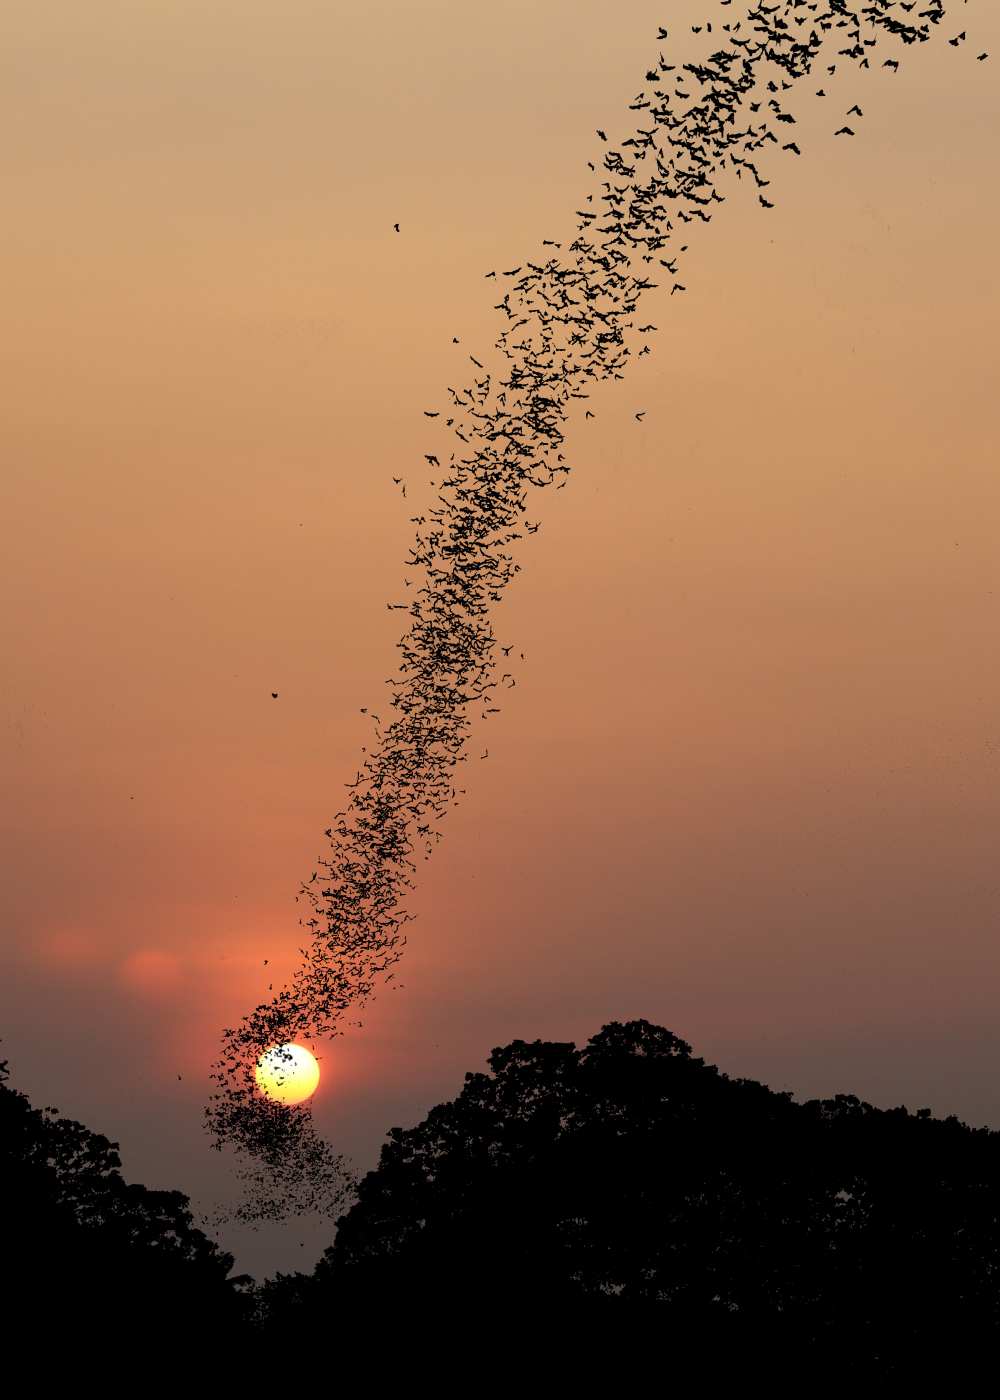 Bat swarm at sunset à Jean De Spiegeleer